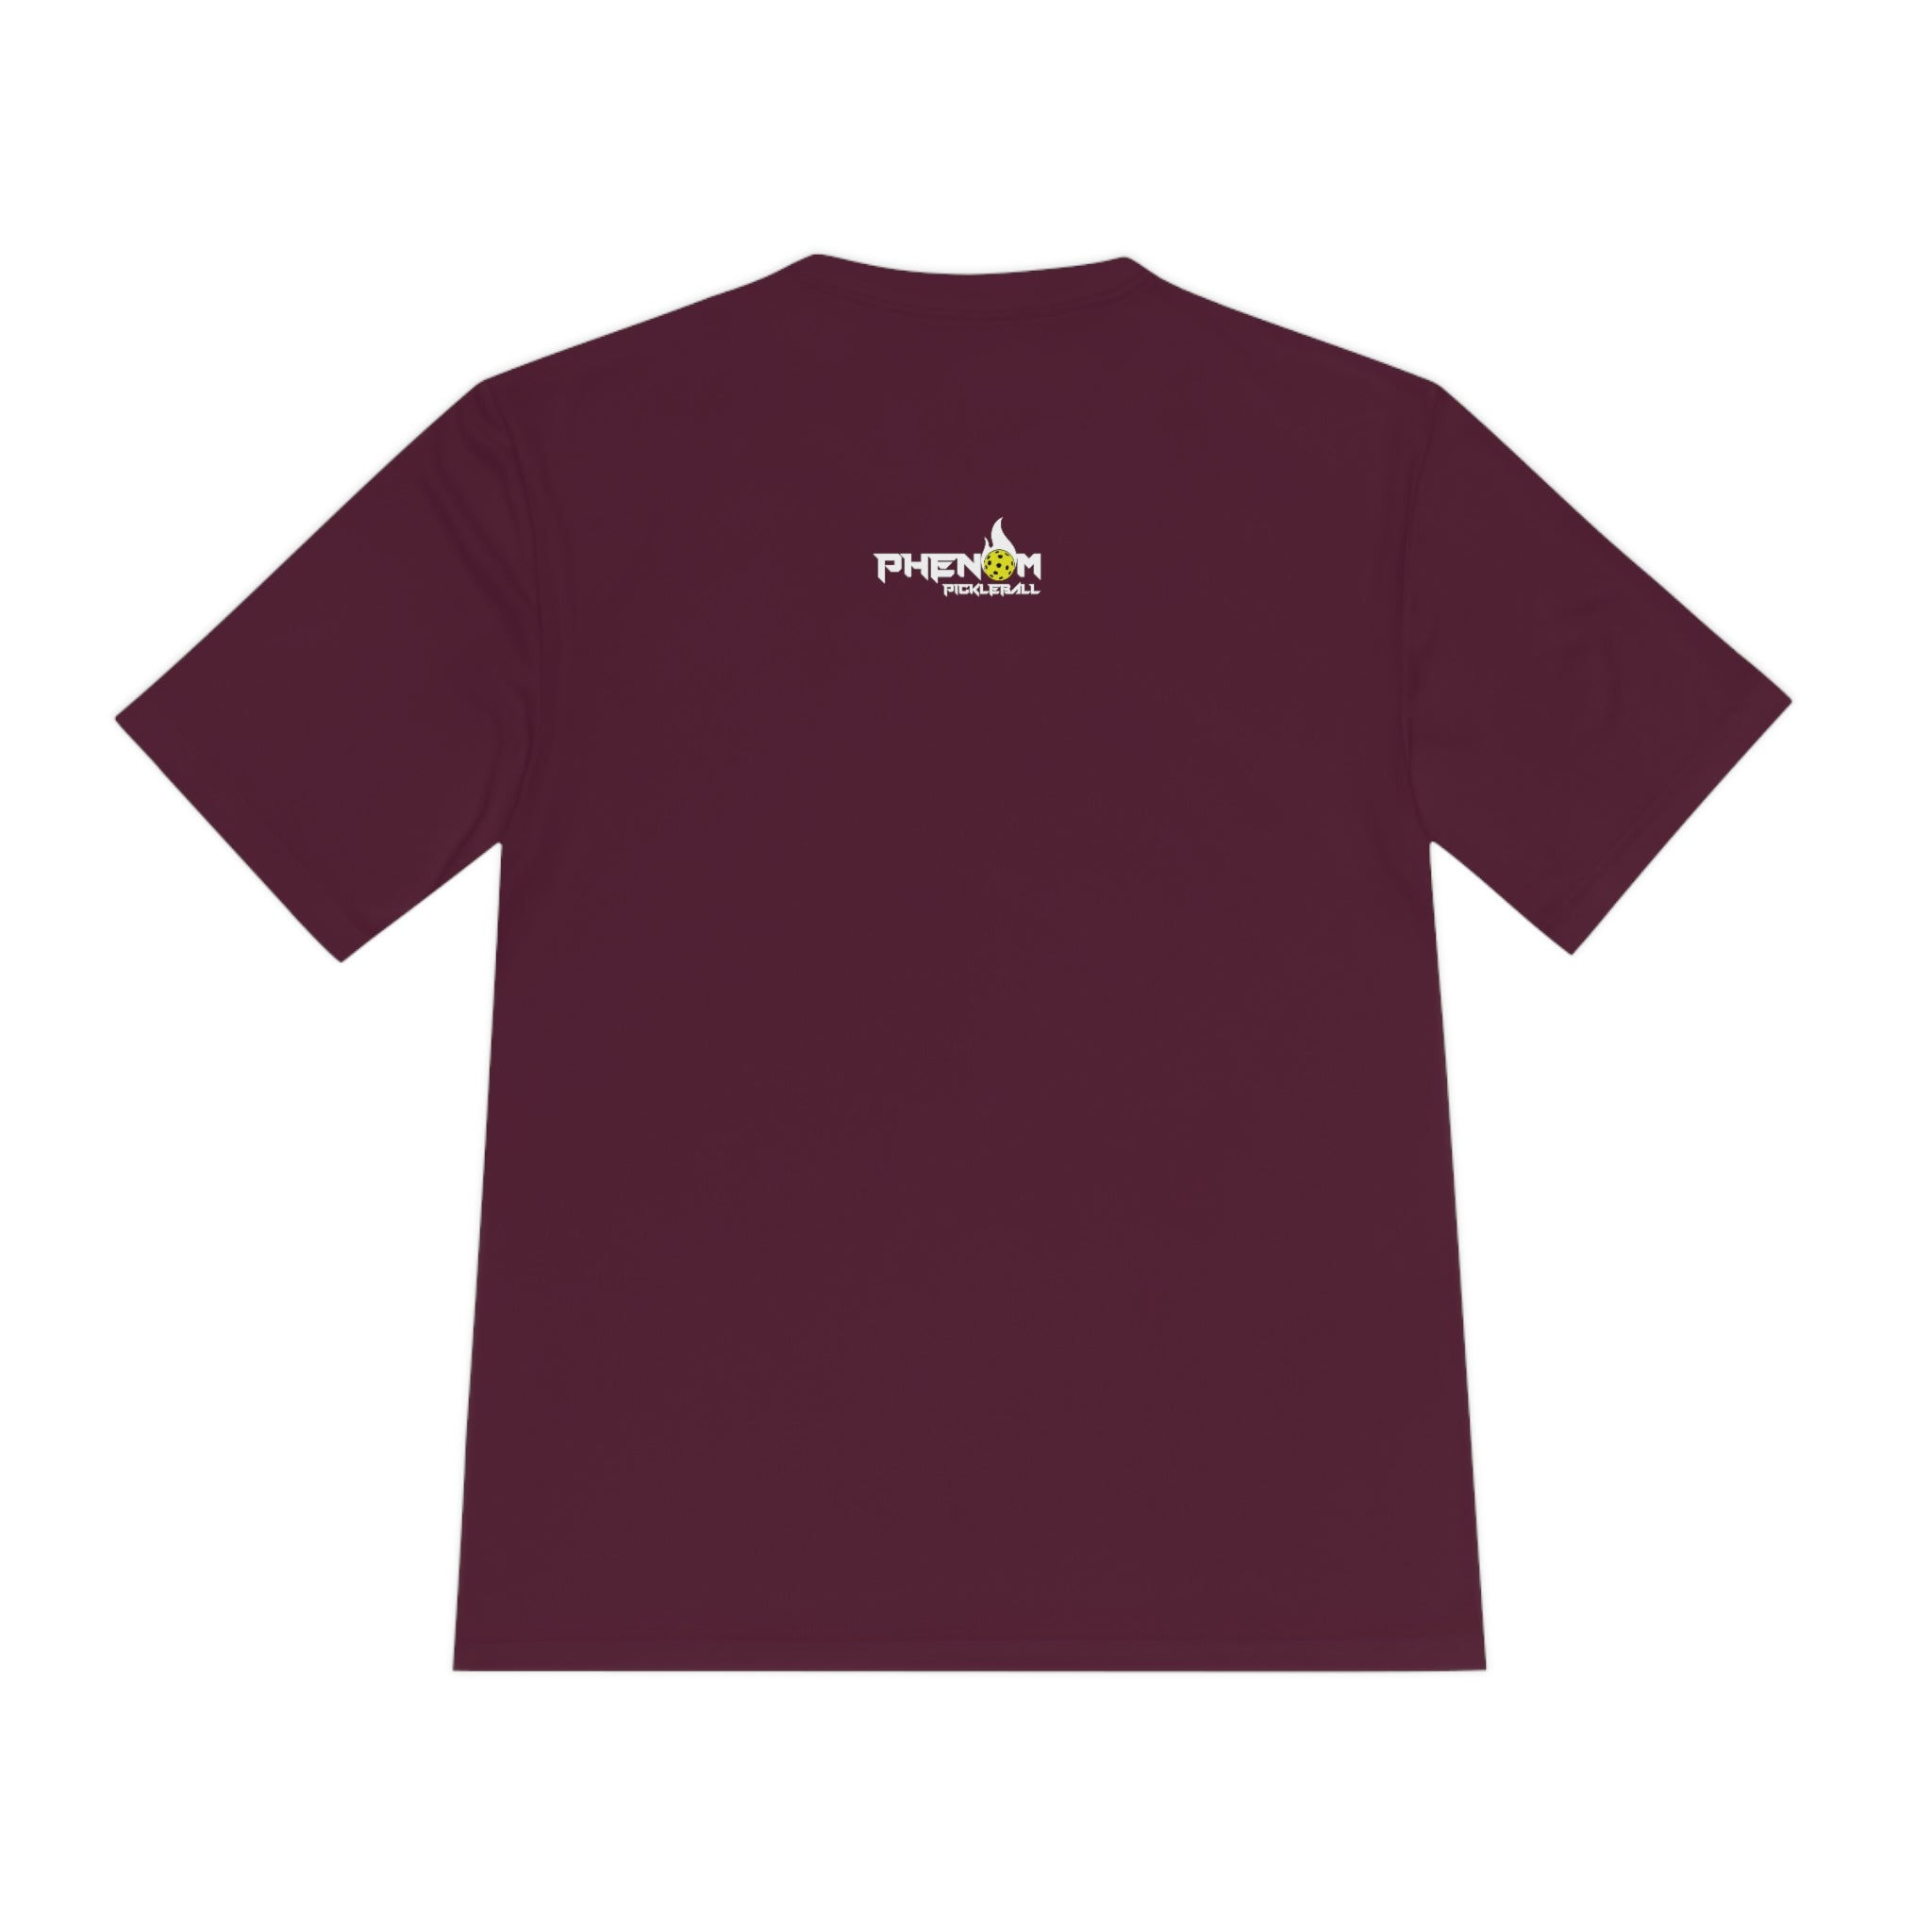 maroon burgundy heavy dinker men's athletic pickleball apparel shirt phenom logo back view